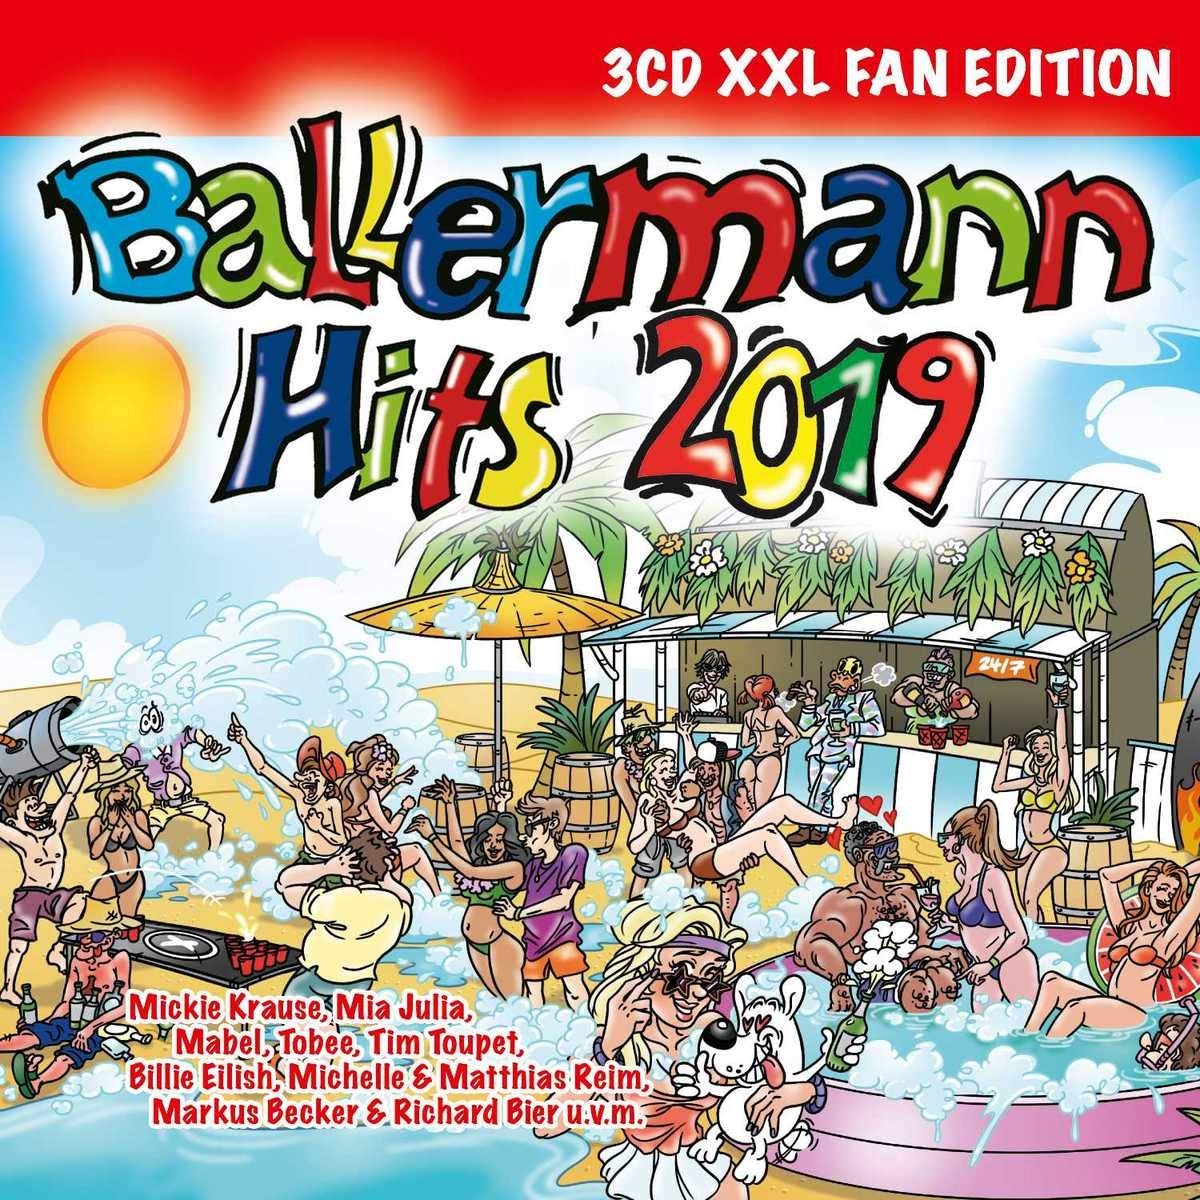 Ballermann Hits 2019 XXL